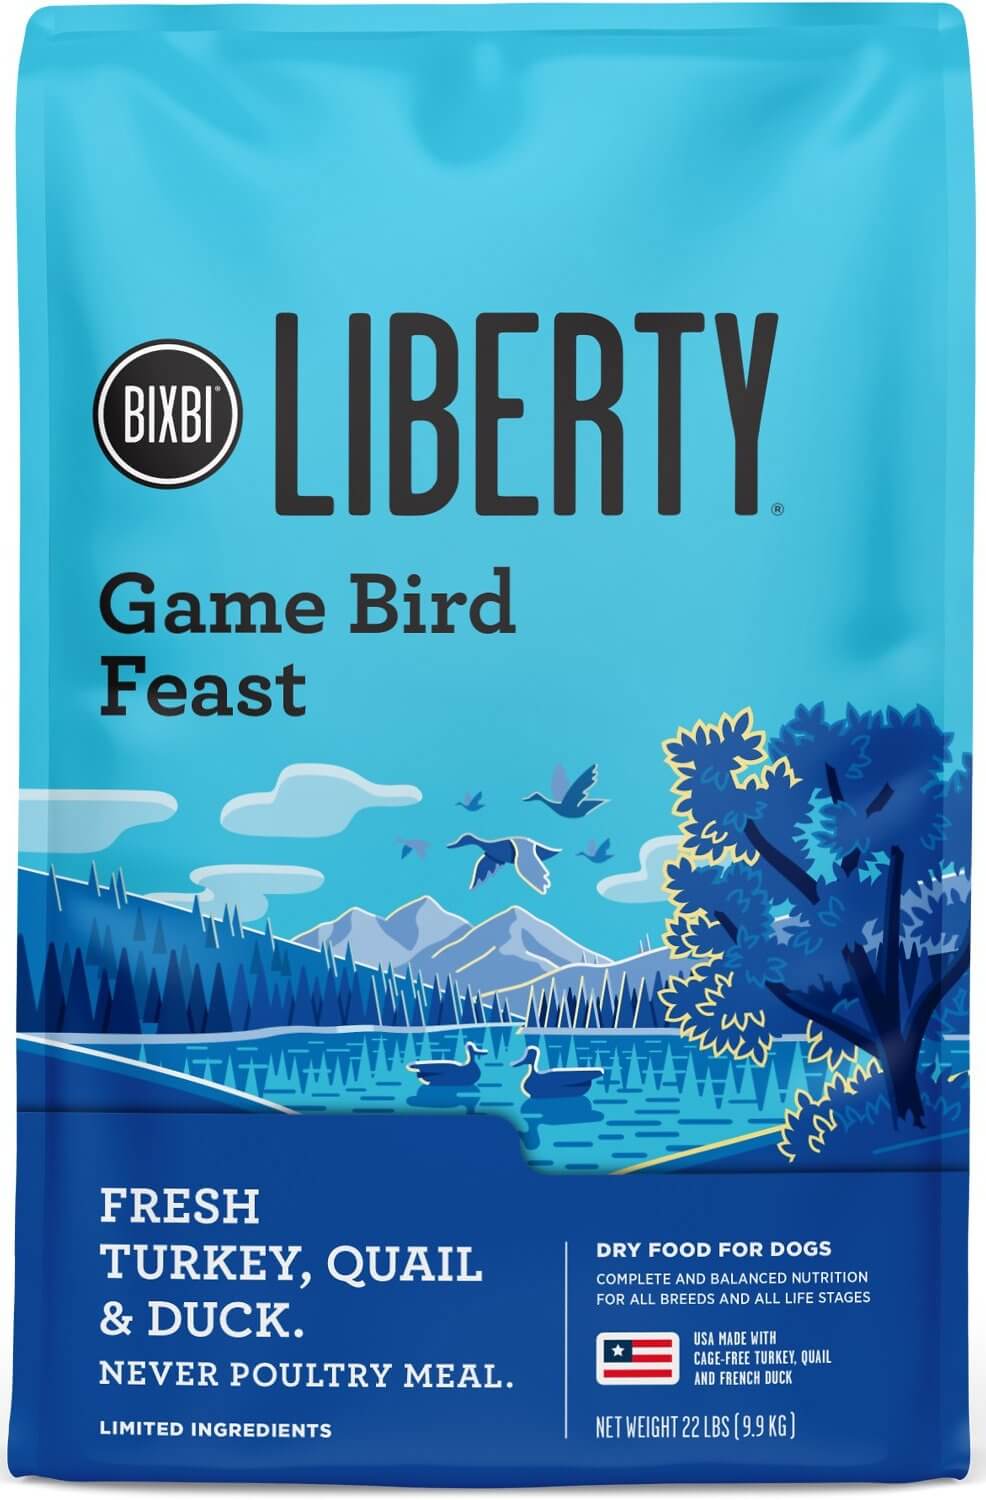 Bixbi Liberty Dog Food Review (Dry)